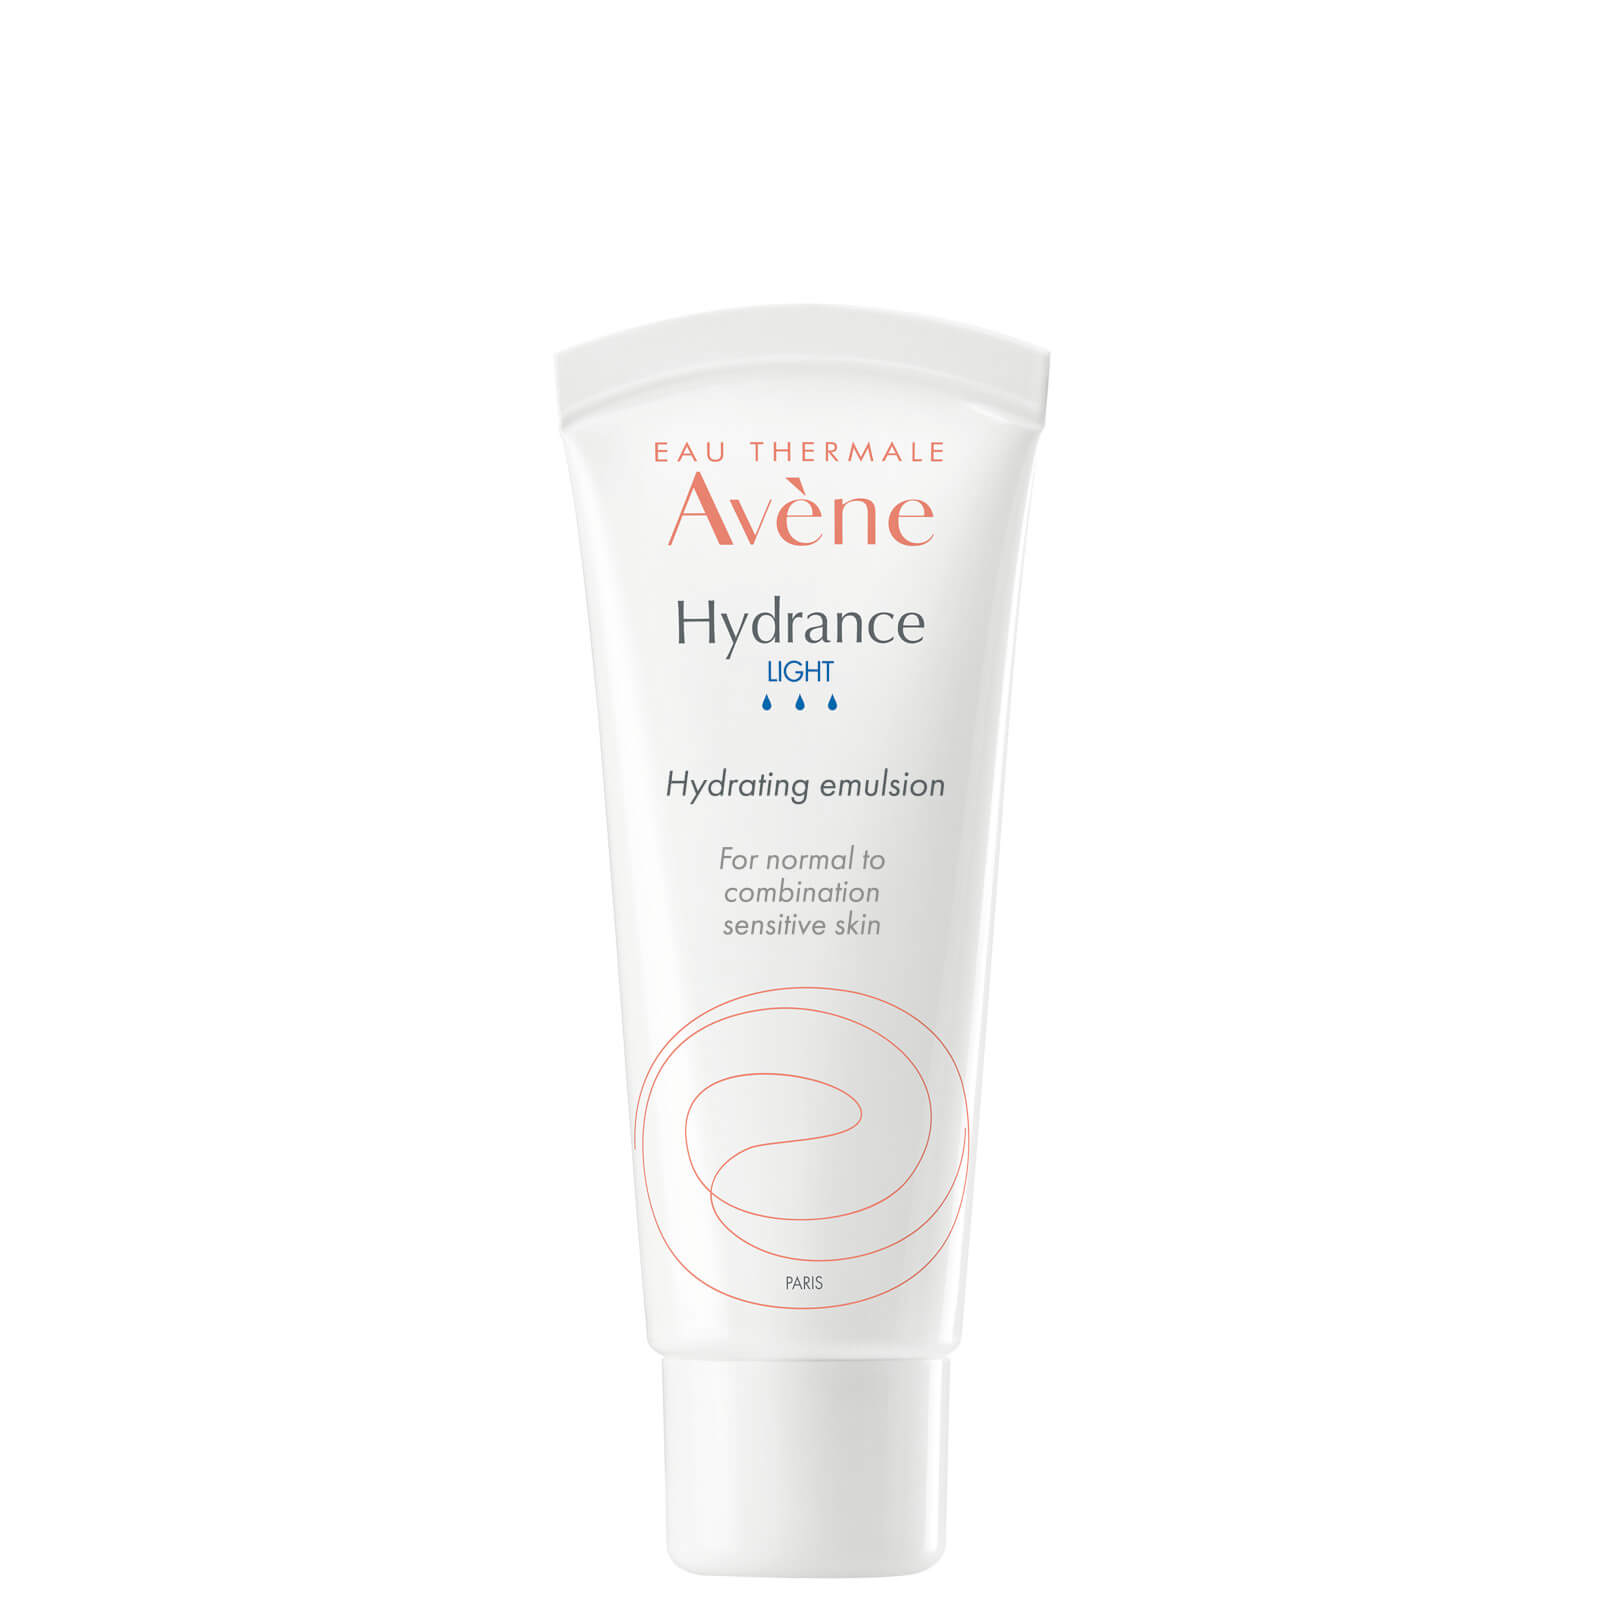 Avene Hydrance Light Hydrating Emulsion Moisturiser for Dehydrated Skin 40ml